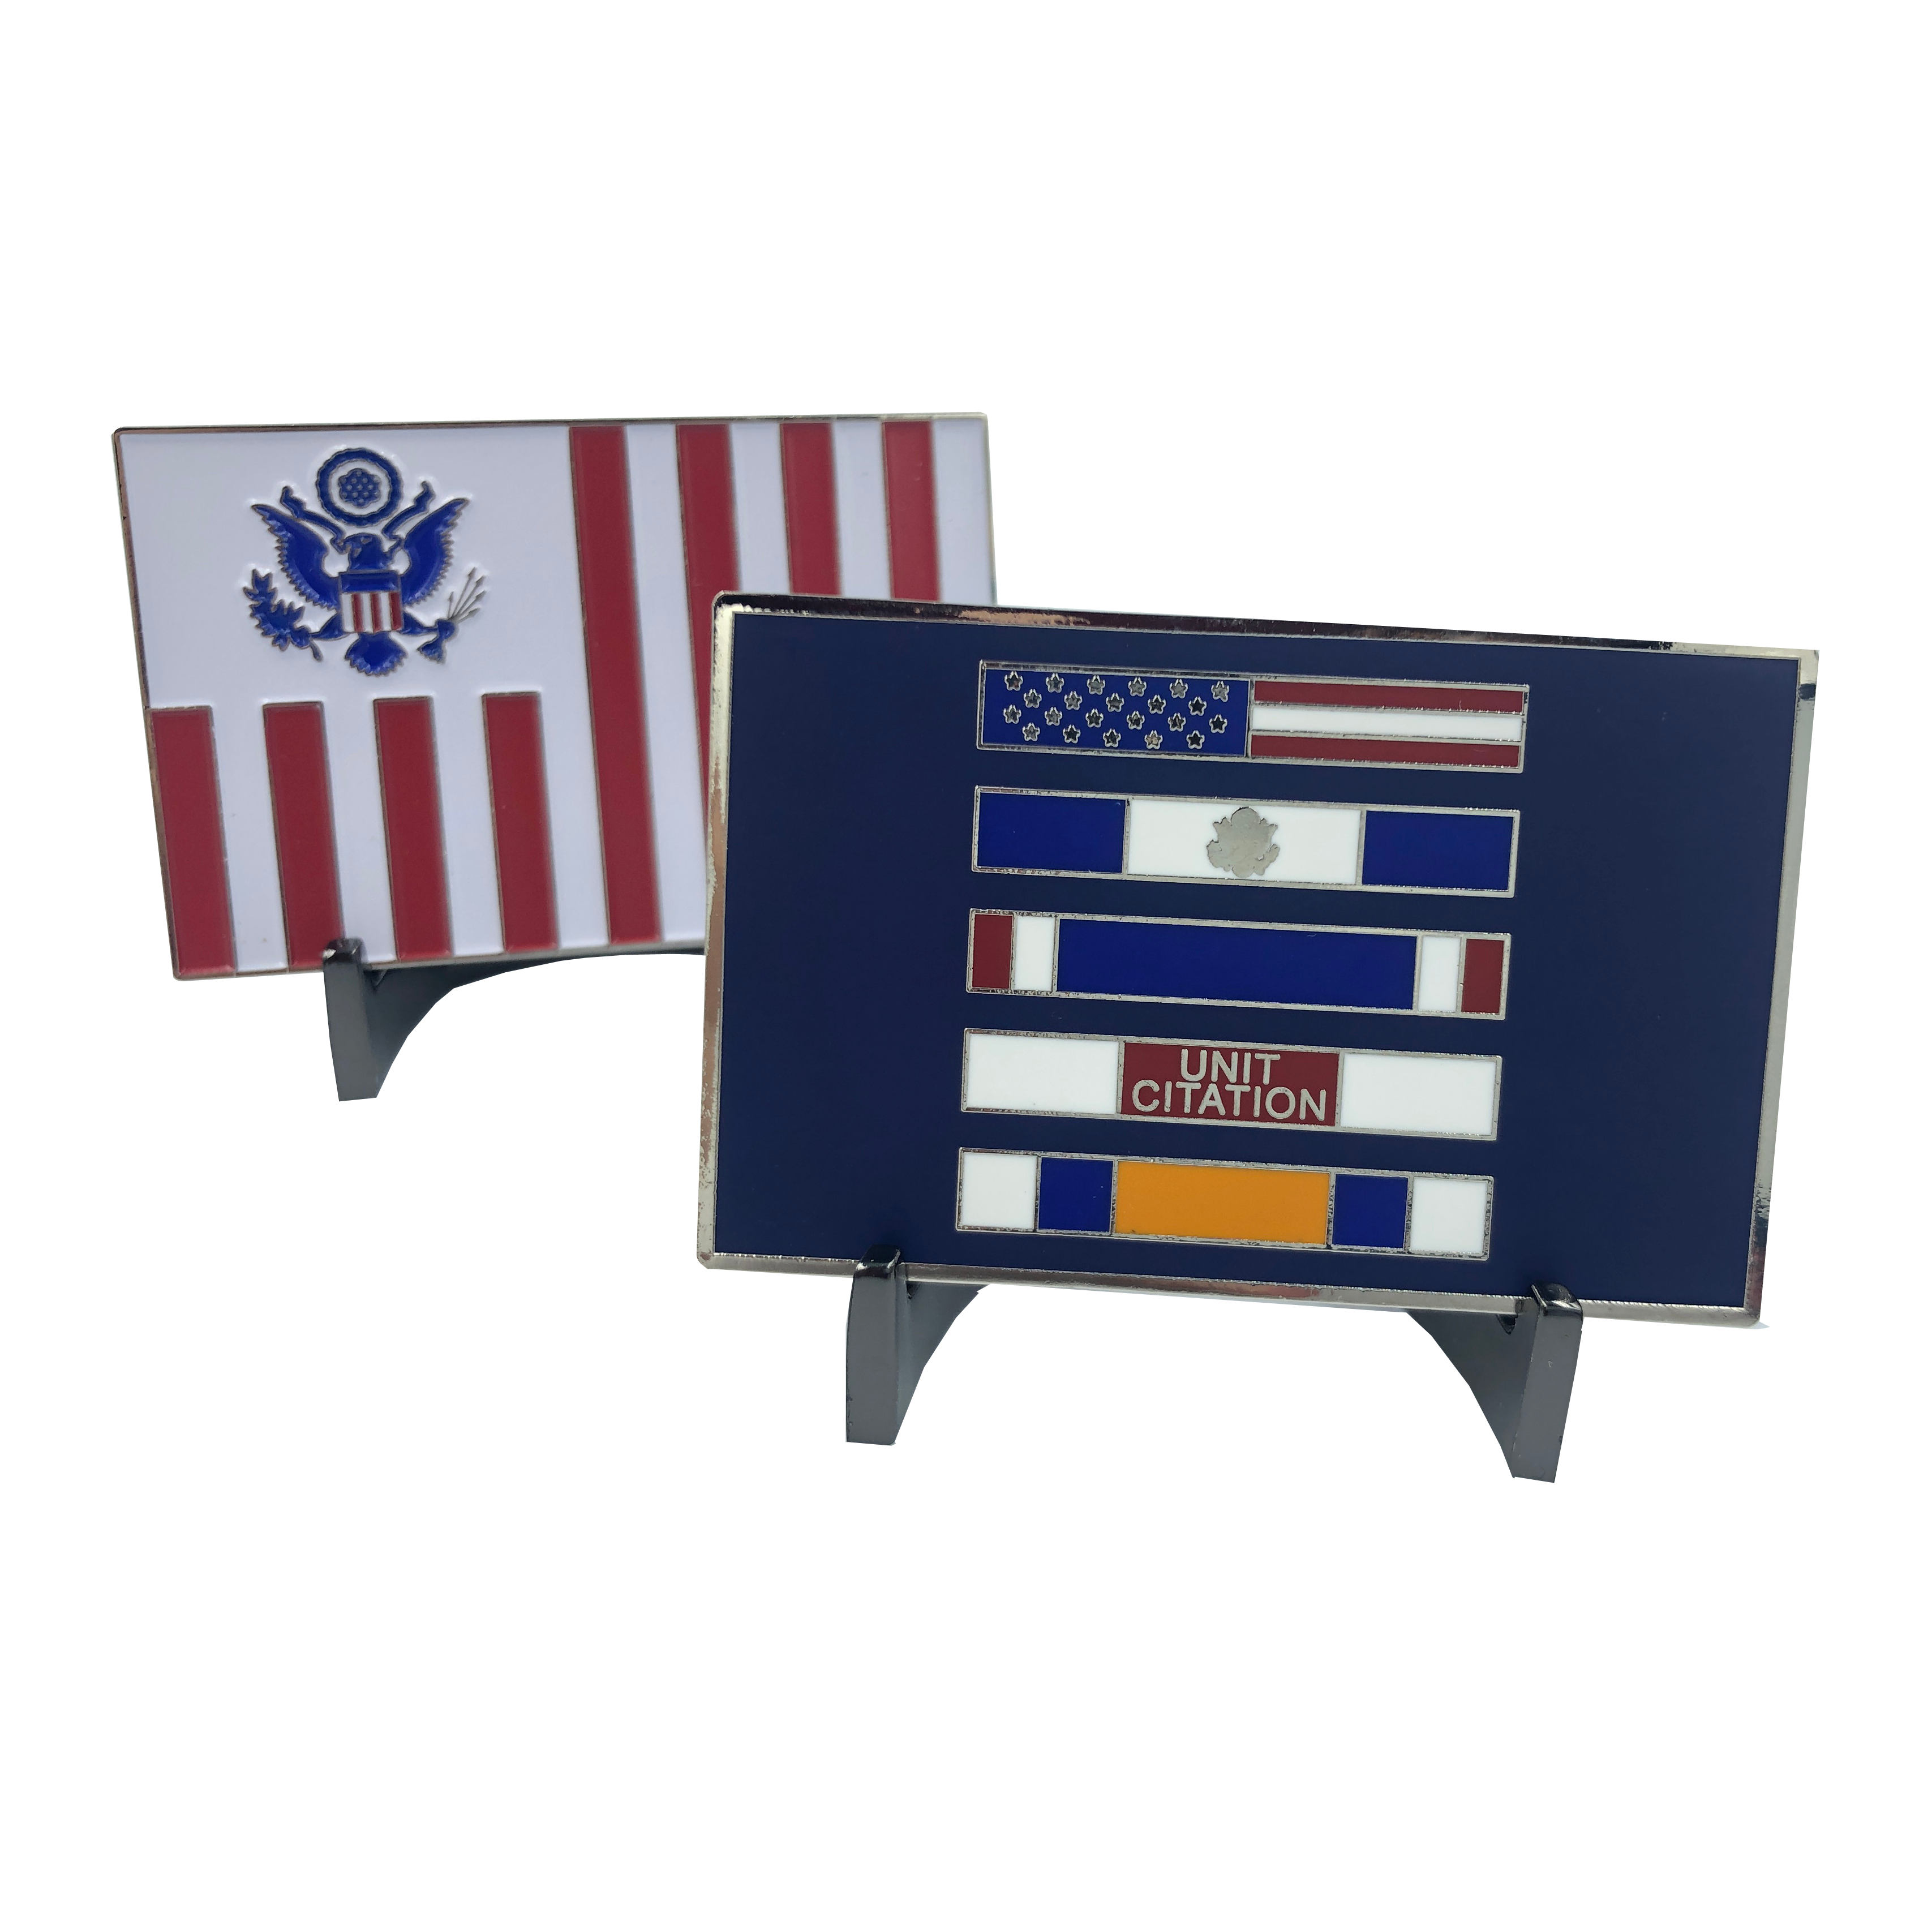 Jj 013 Cbp Unit Citations Commendation Bars Blue Eagle Customs Flag Ch Www Americasfrontline Com Use Promo Usa10 To Save On Your Next Order